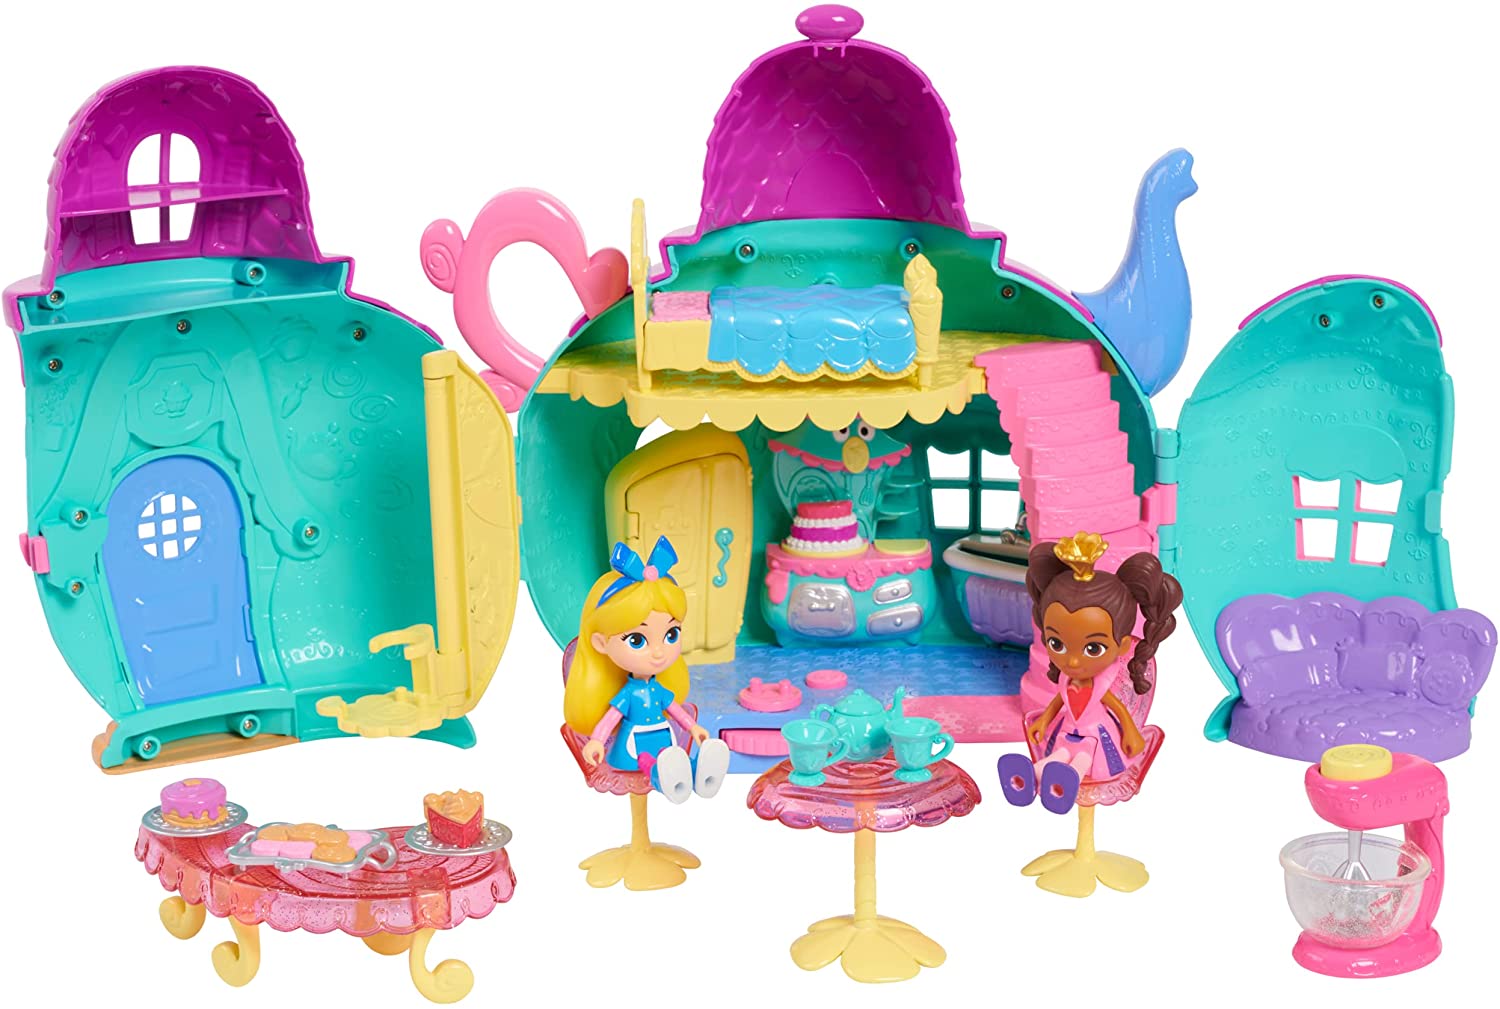 Alice's Wonderland Bakery Wonderland Baker's Bag Set 98511 – Cove Toy House